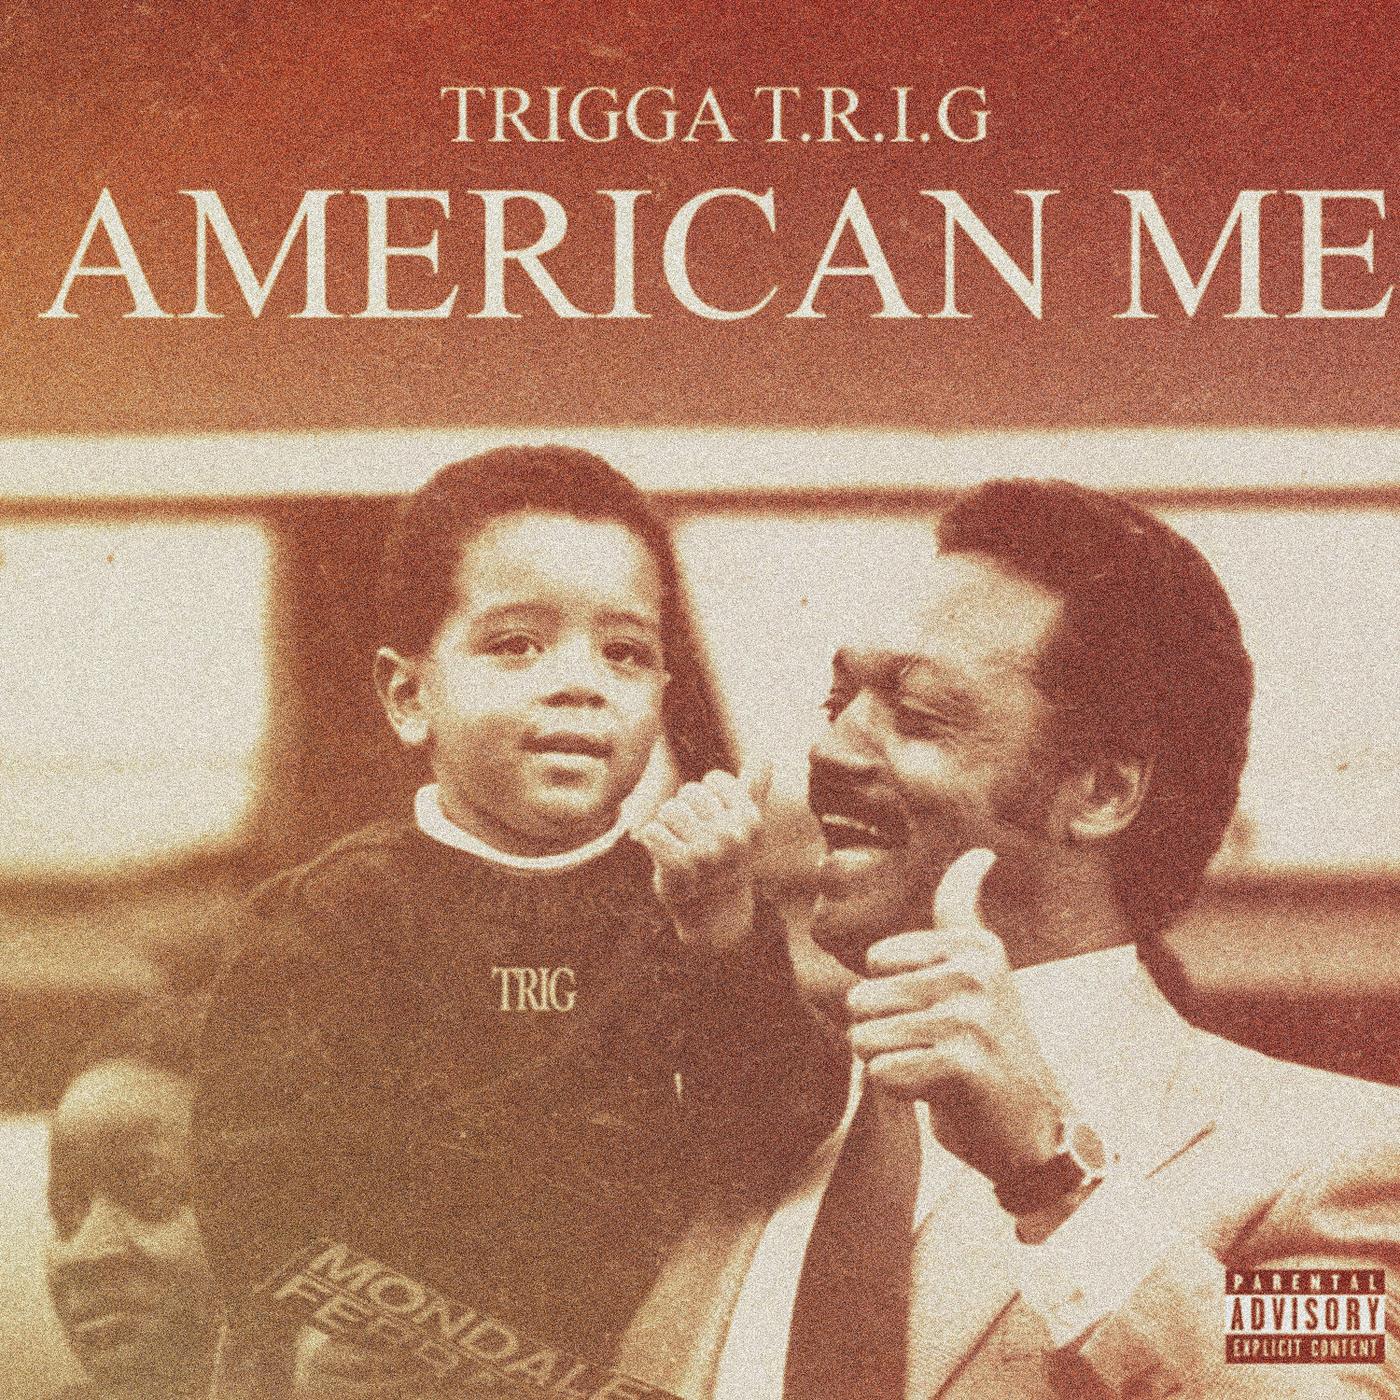 Trigga Trig - History